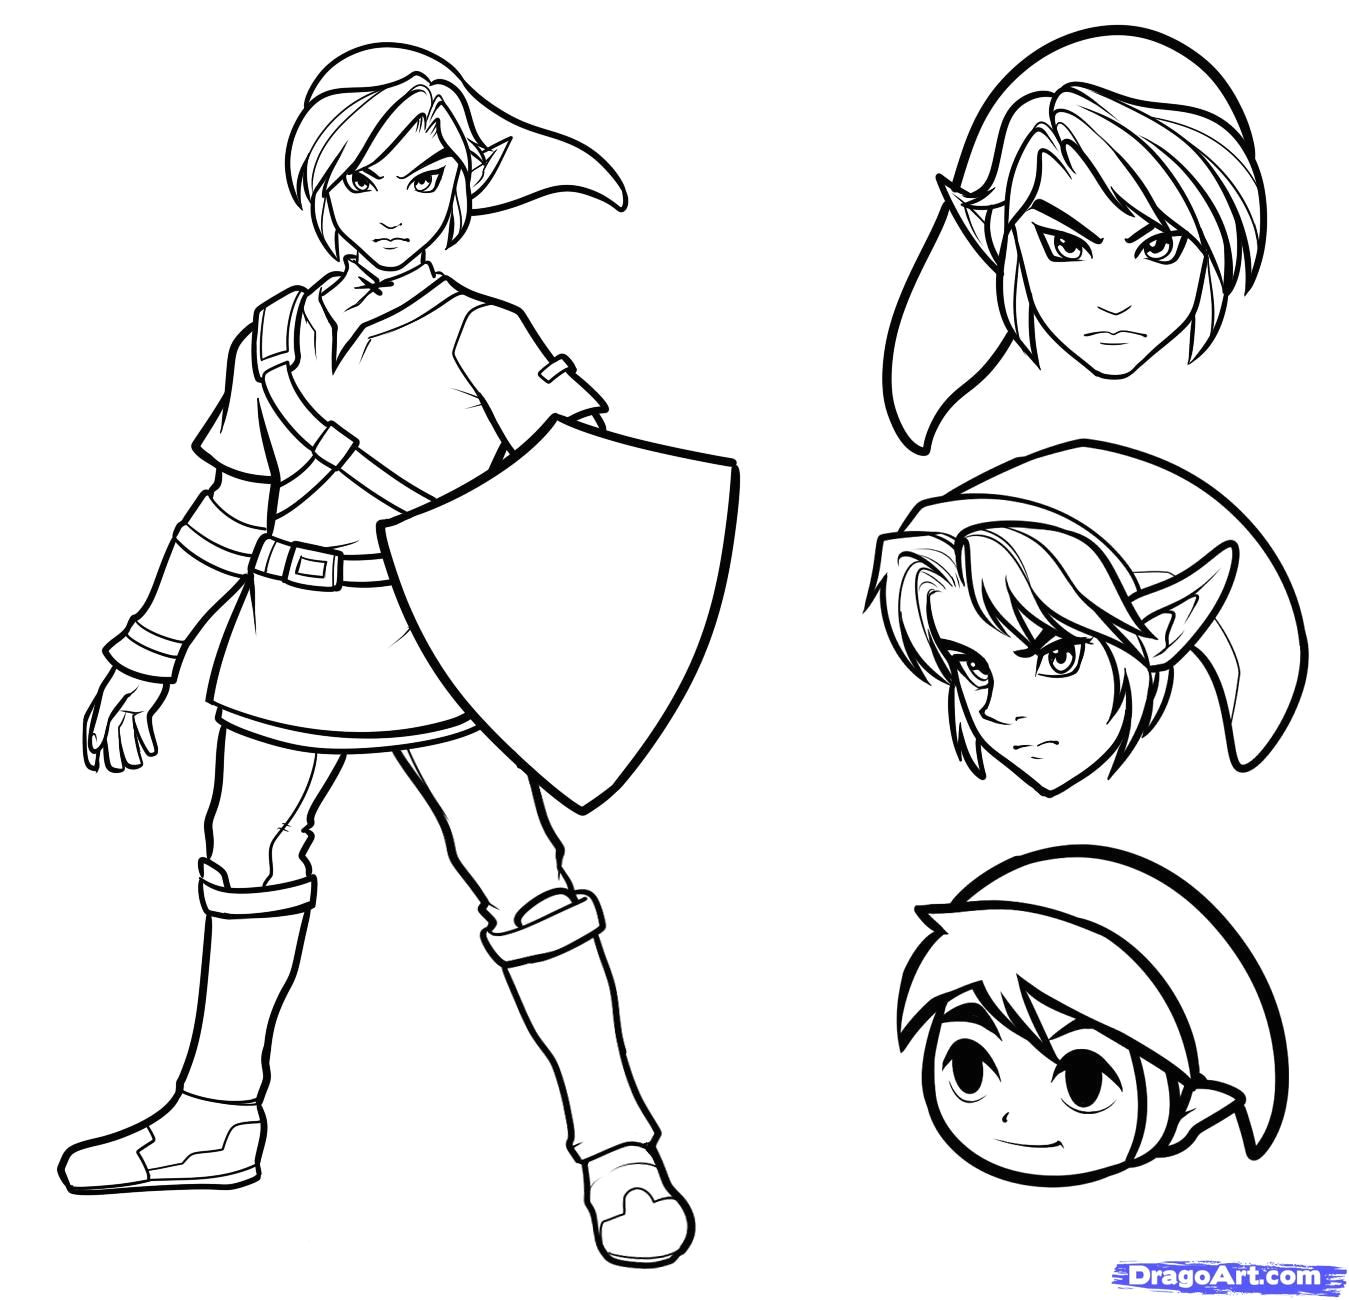 Easy Zelda Drawings How to Draw Link Easy Step 9 Phots Drawings Easy Drawings